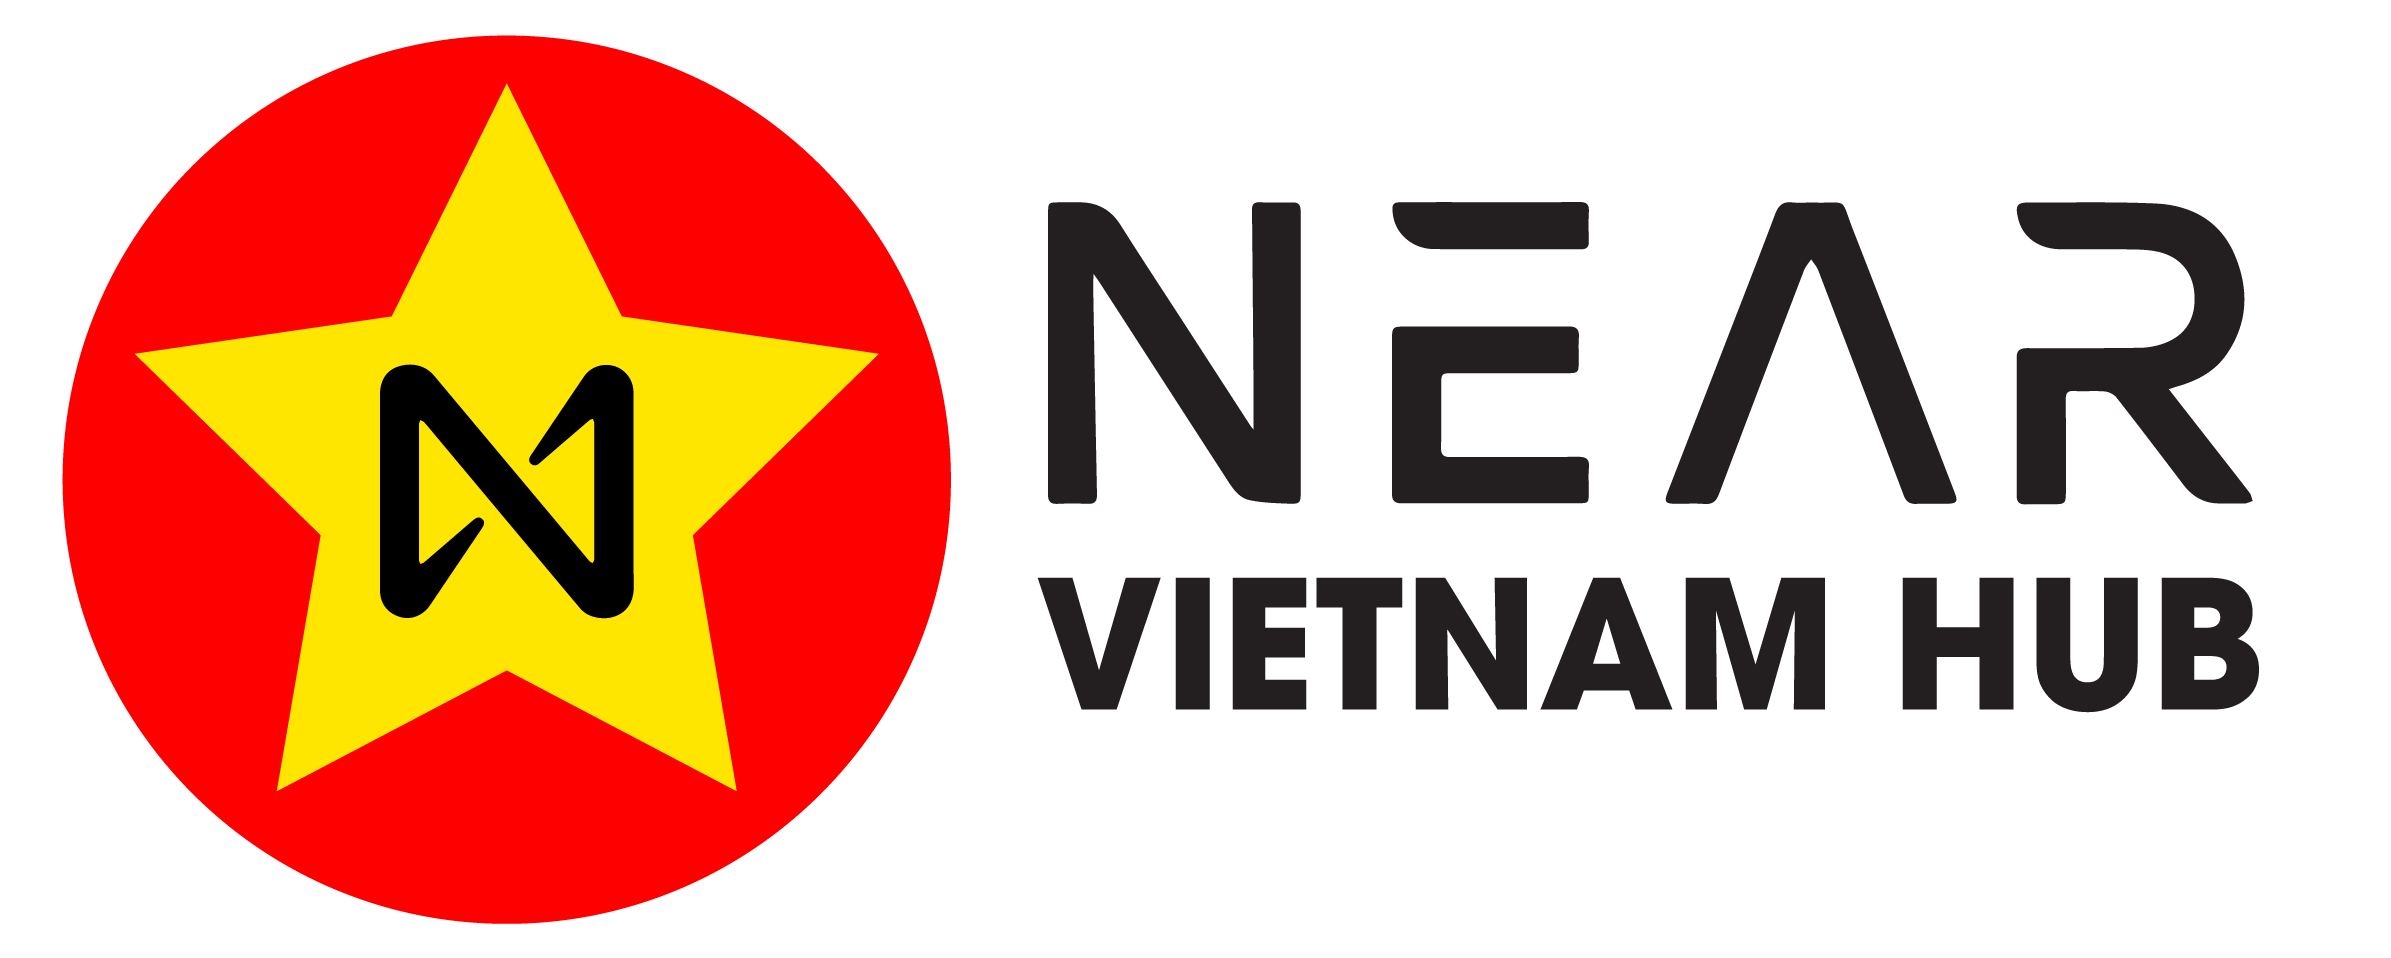 NEAR Viet Nam Hub